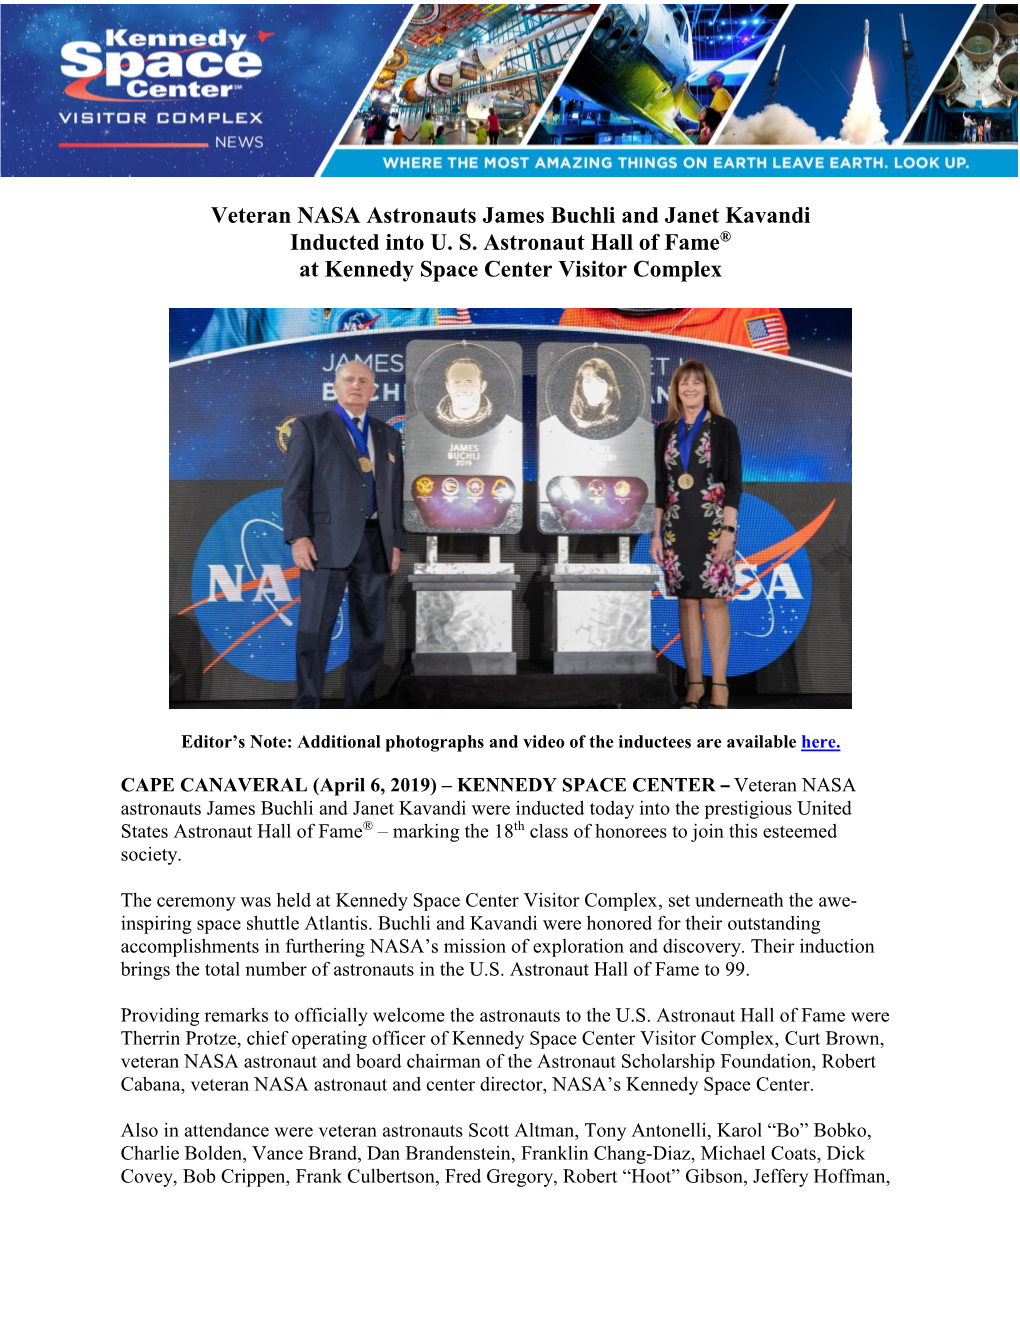 Veteran NASA Astronauts James Buchli and Janet Kavandi Inducted Into U